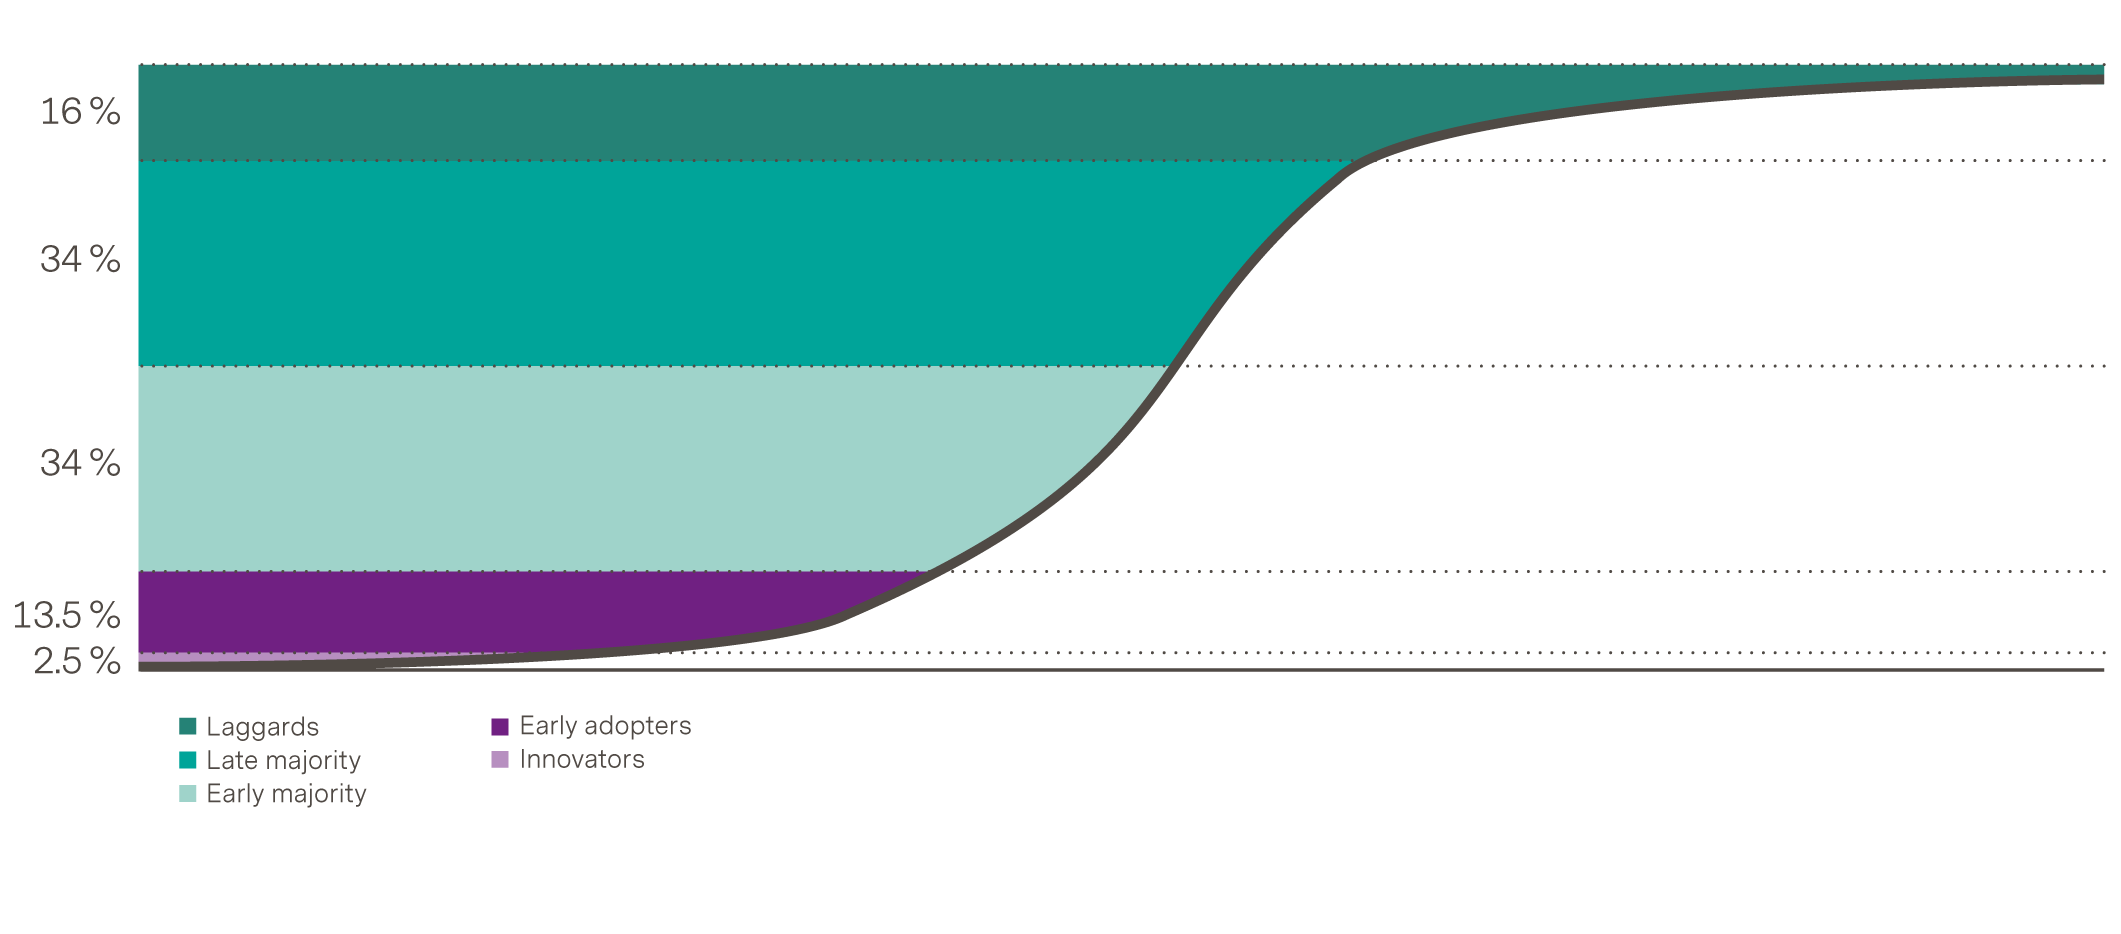 Innovation Adoption Curve: Typical User Innovation Adoption